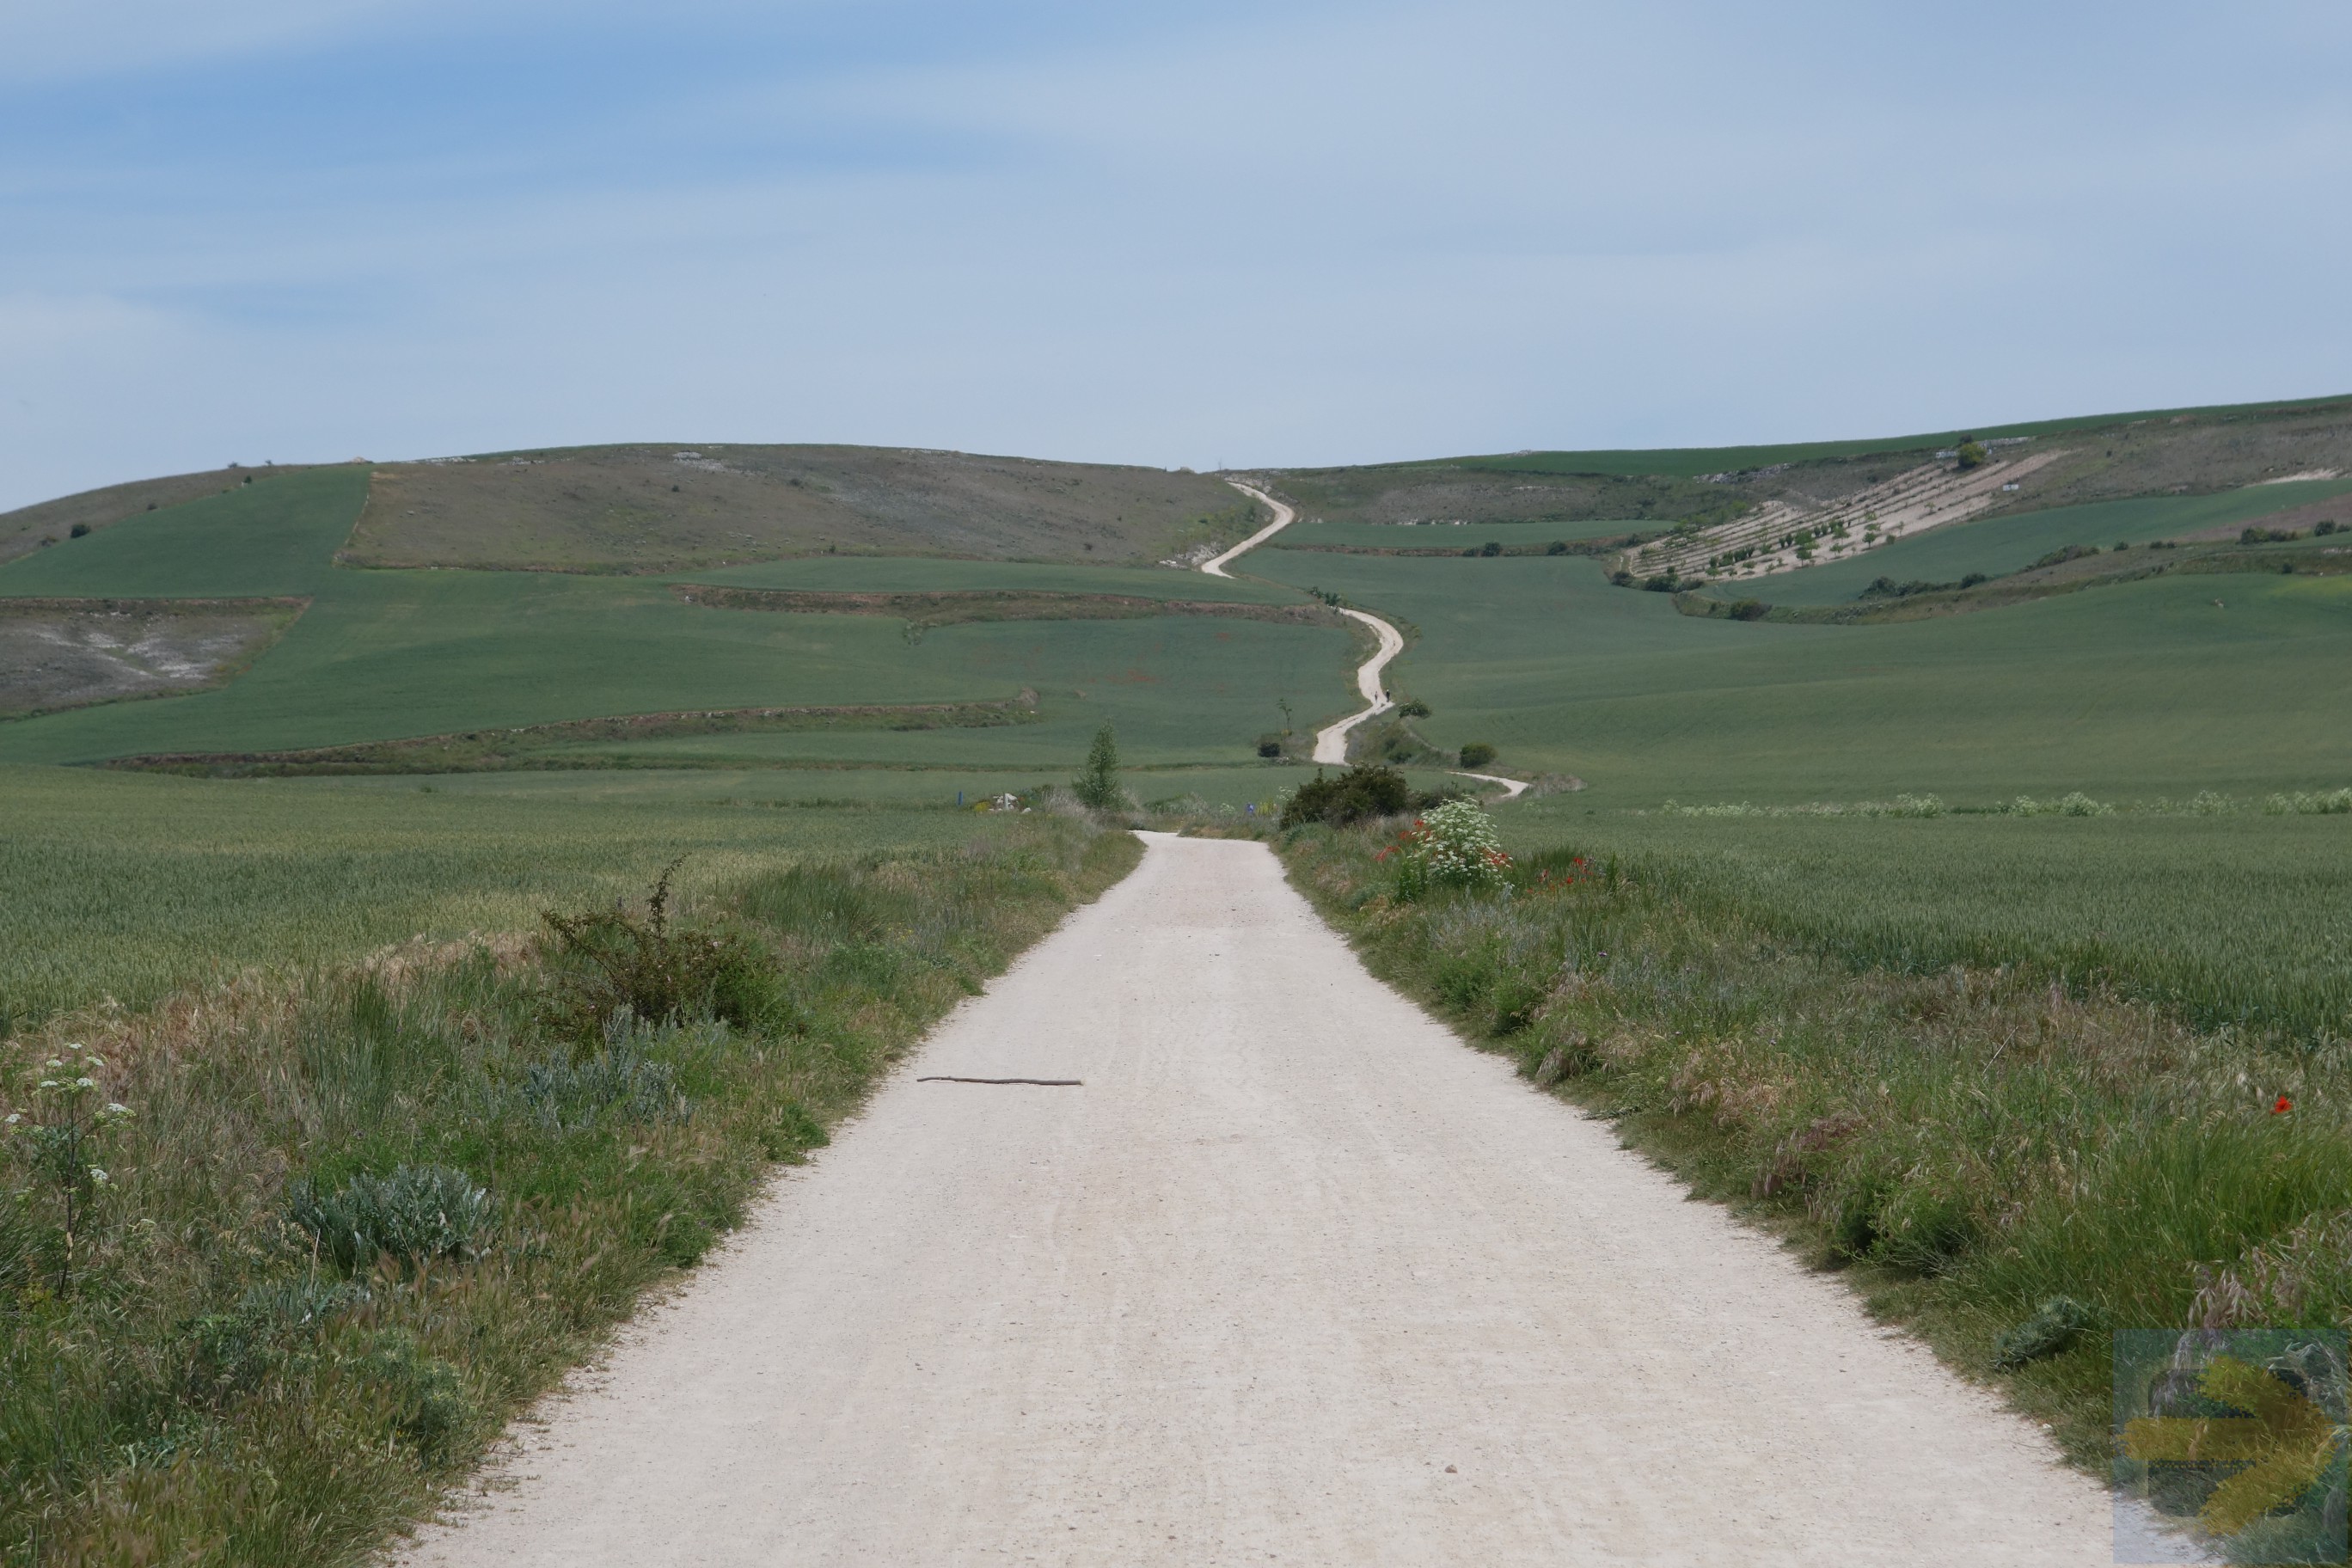 An Iconic shot of El Camino